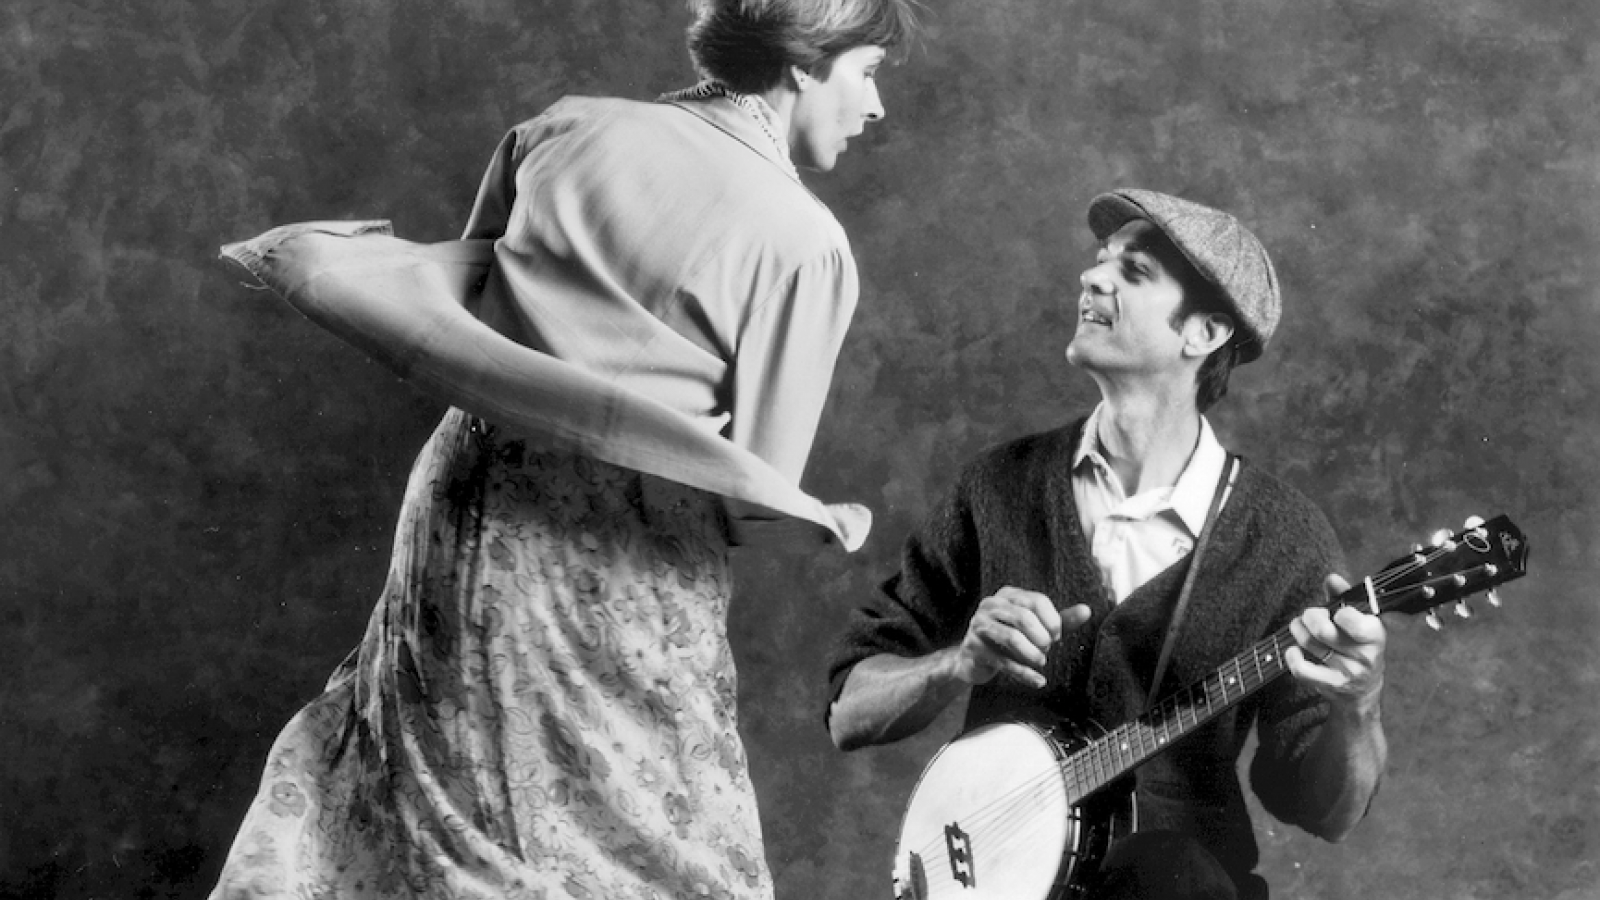 Rick Good on one knee playing banjo while woman dances